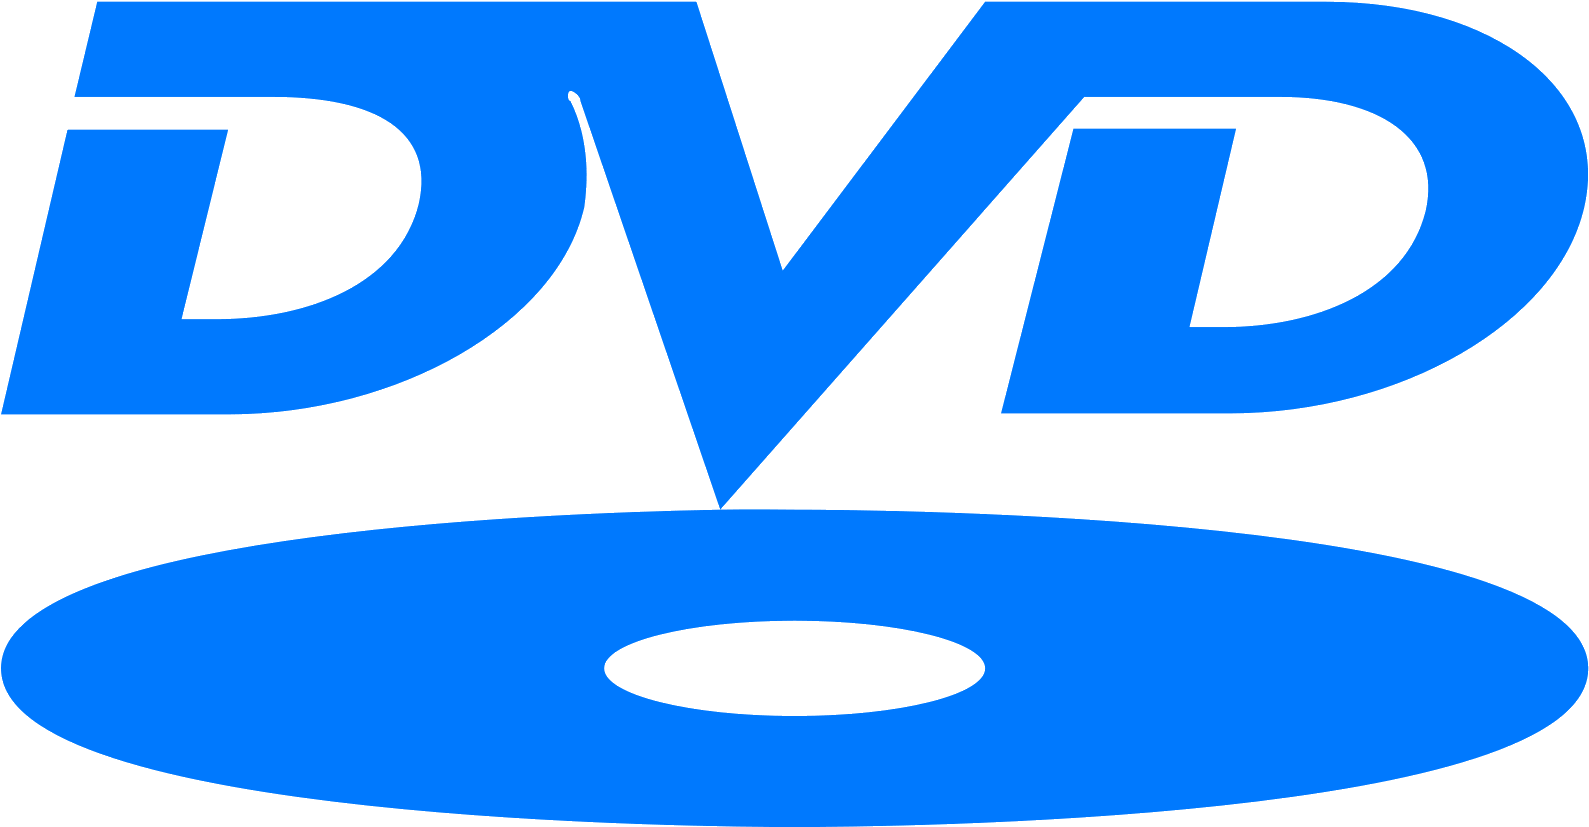 Hd Dvd Dvd Video Logo Blu Ray Disc 1600x1600 Png Clipart Download